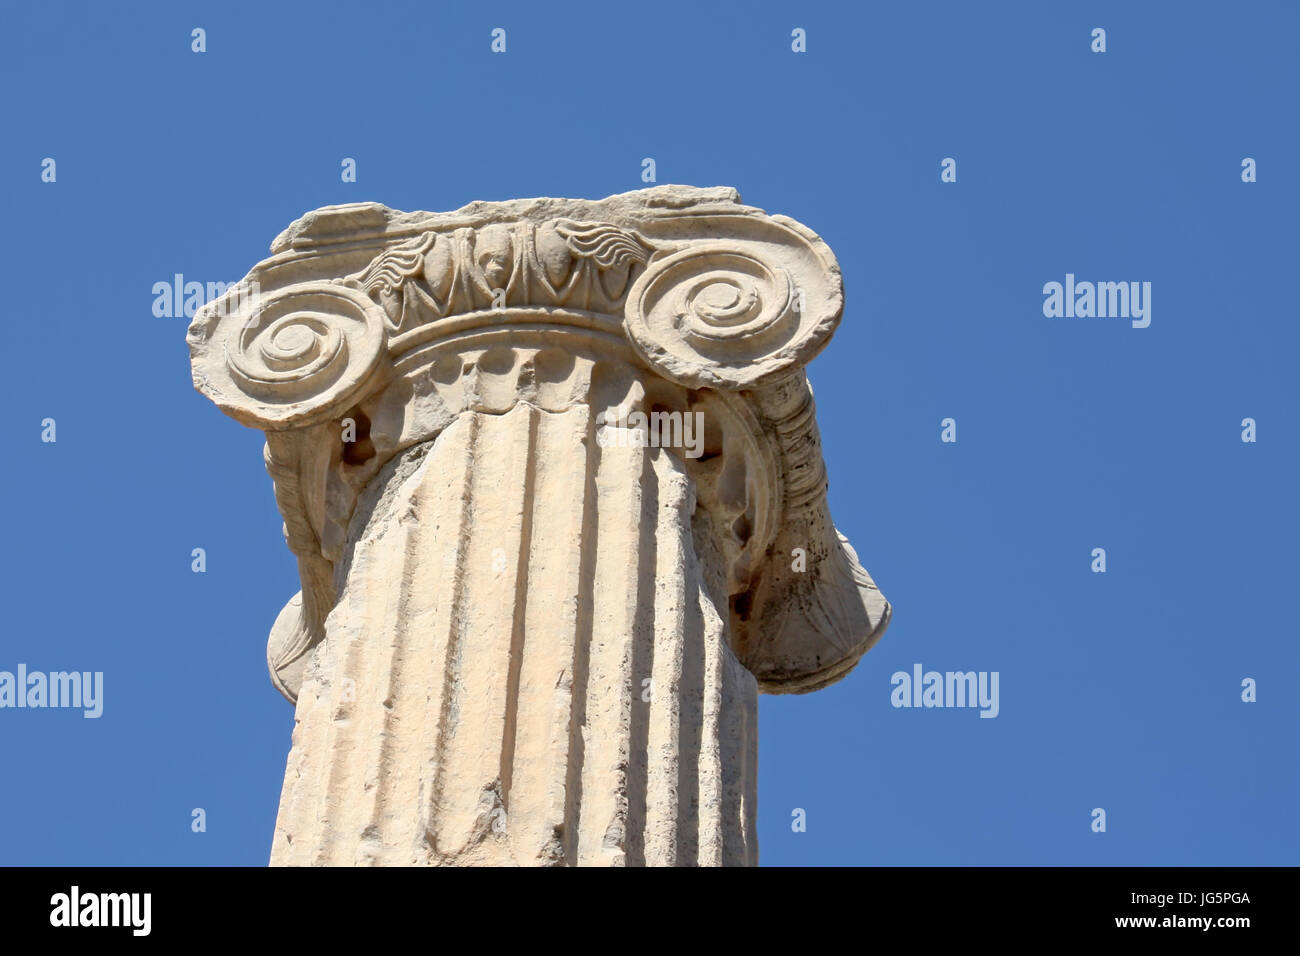 Ionic order column chapiter against blue sky Stock Photo